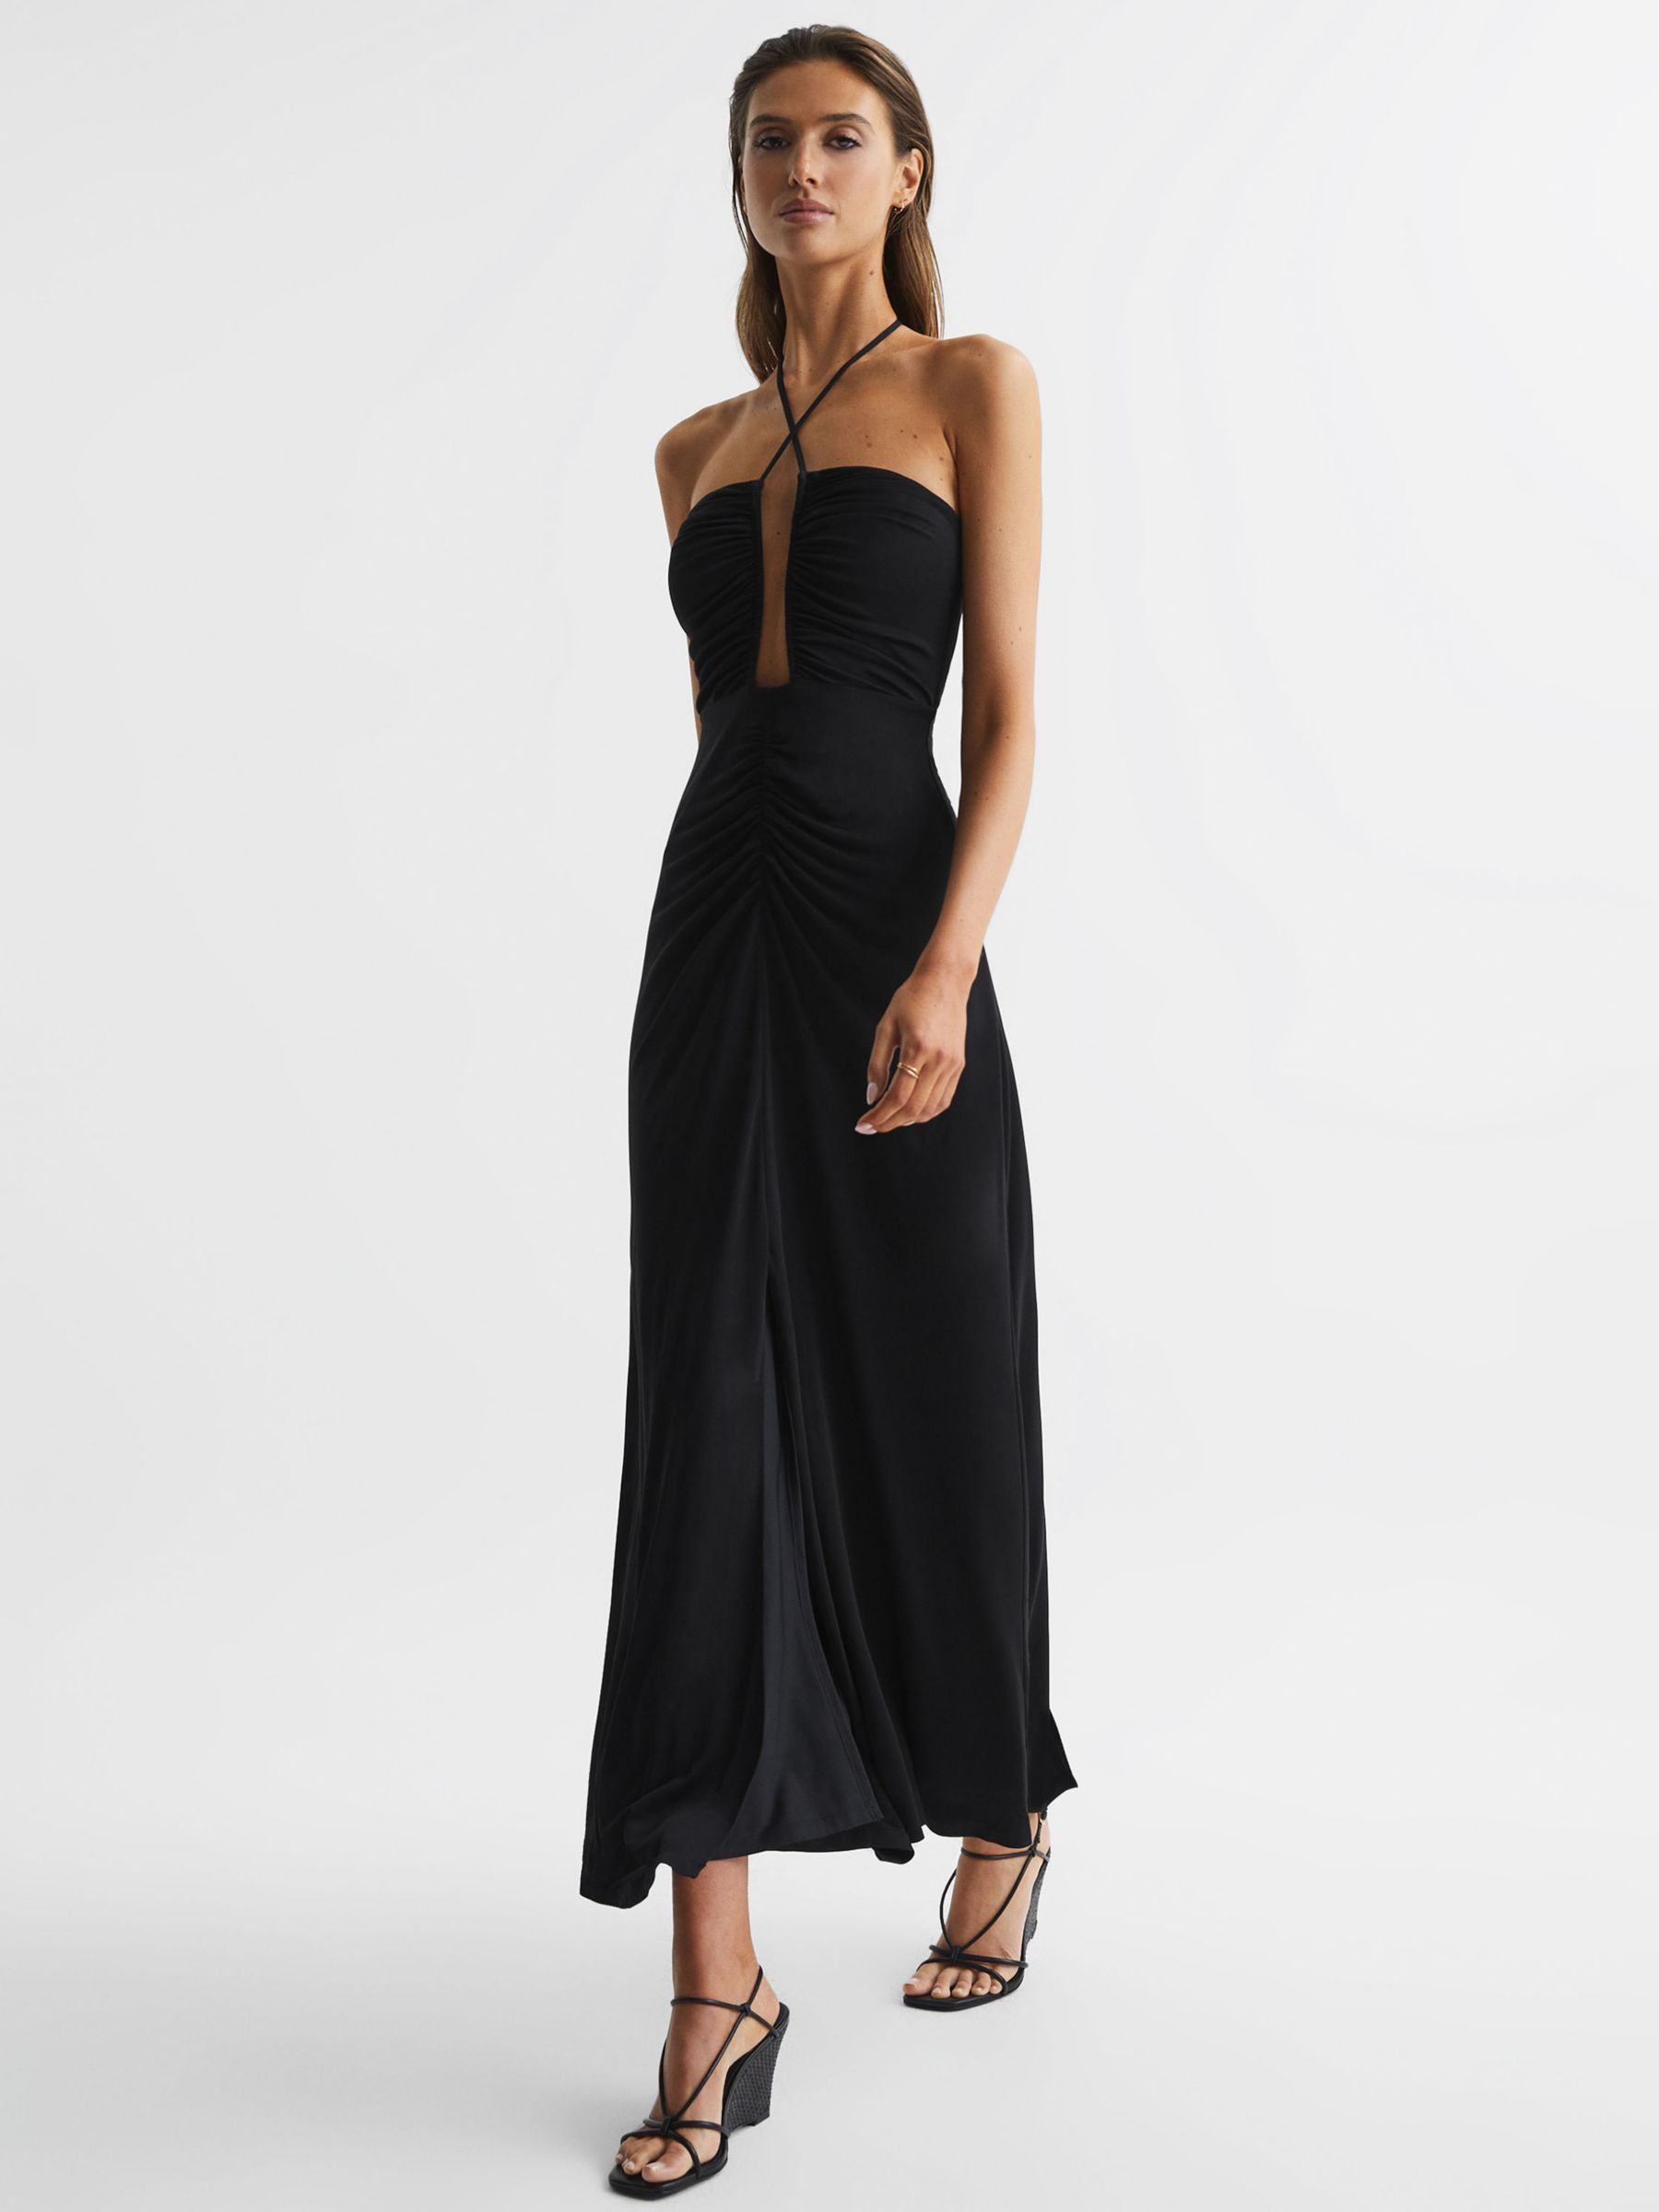 Reiss Lana Plunge Strappy Bodice Dress, Black at John Lewis & Partners